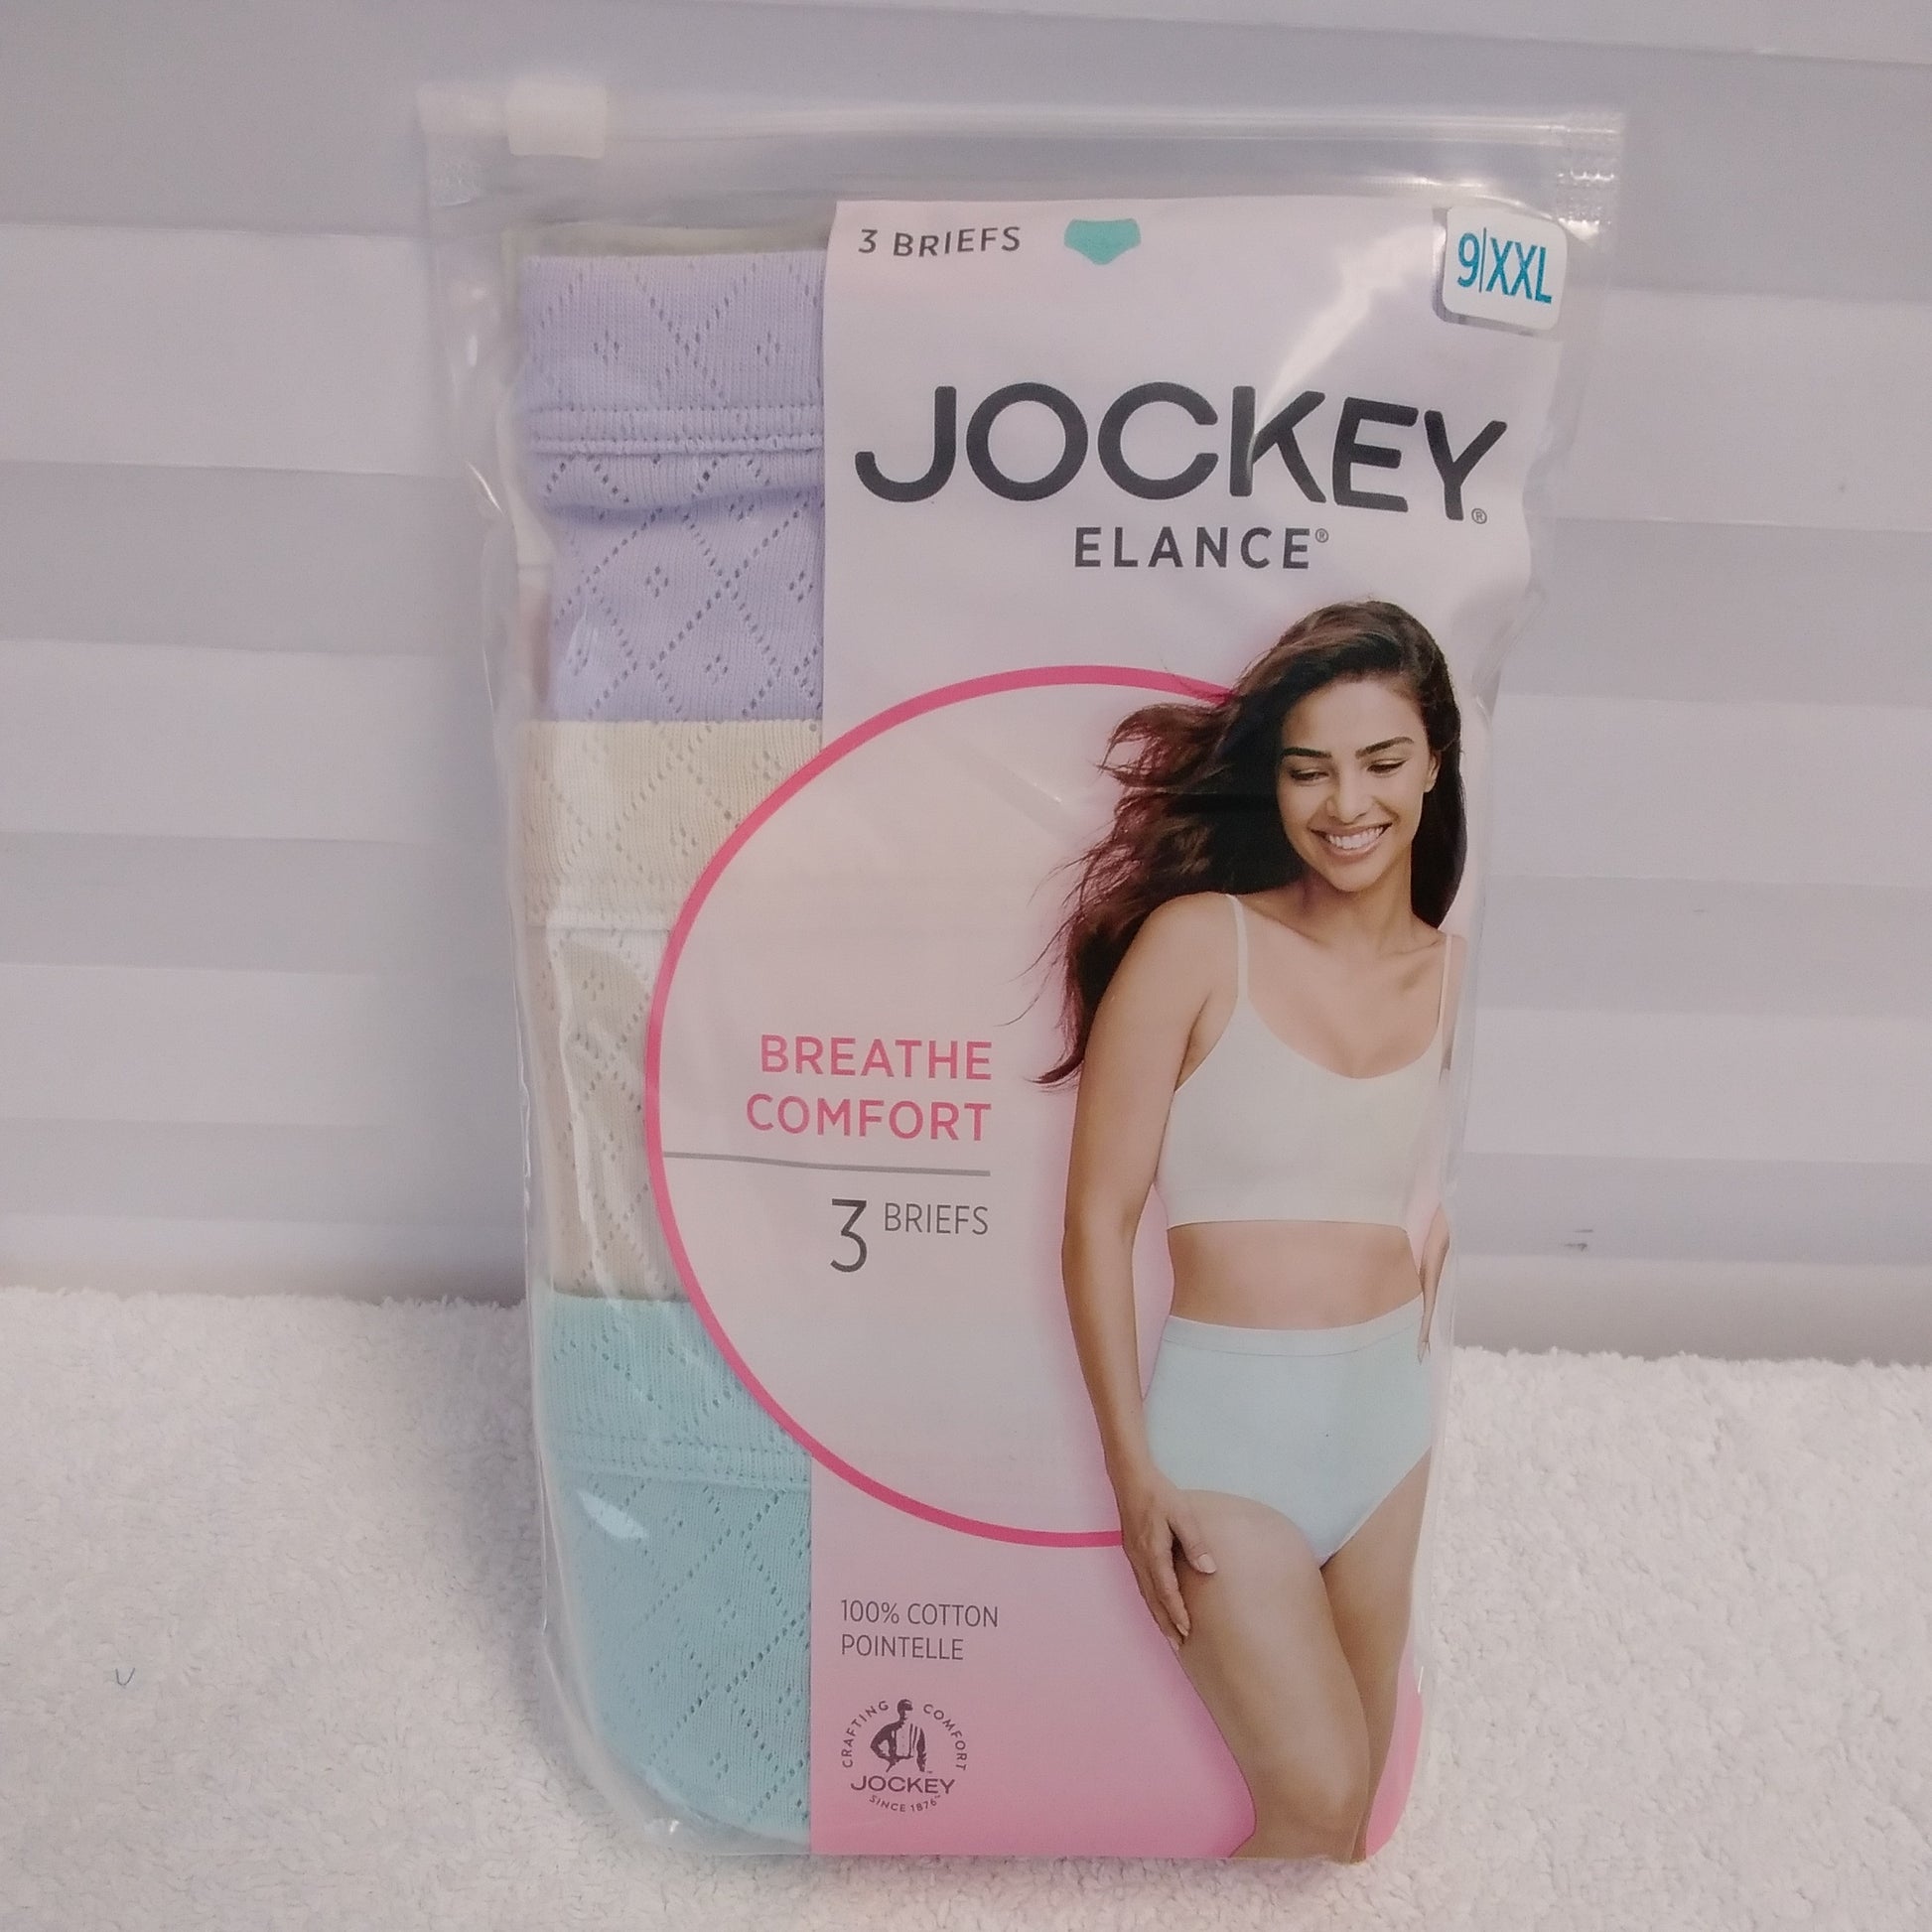 NWT - Jockey Elance Breathe Comfort 100% Cotton Brief Panties 3